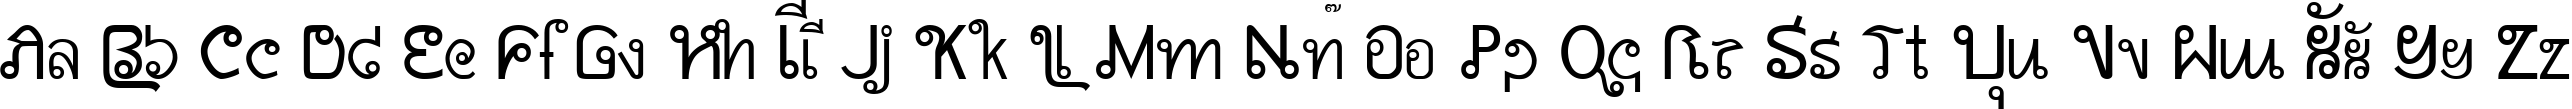 Пример написания английского алфавита шрифтом AW_Siam  English not Thai